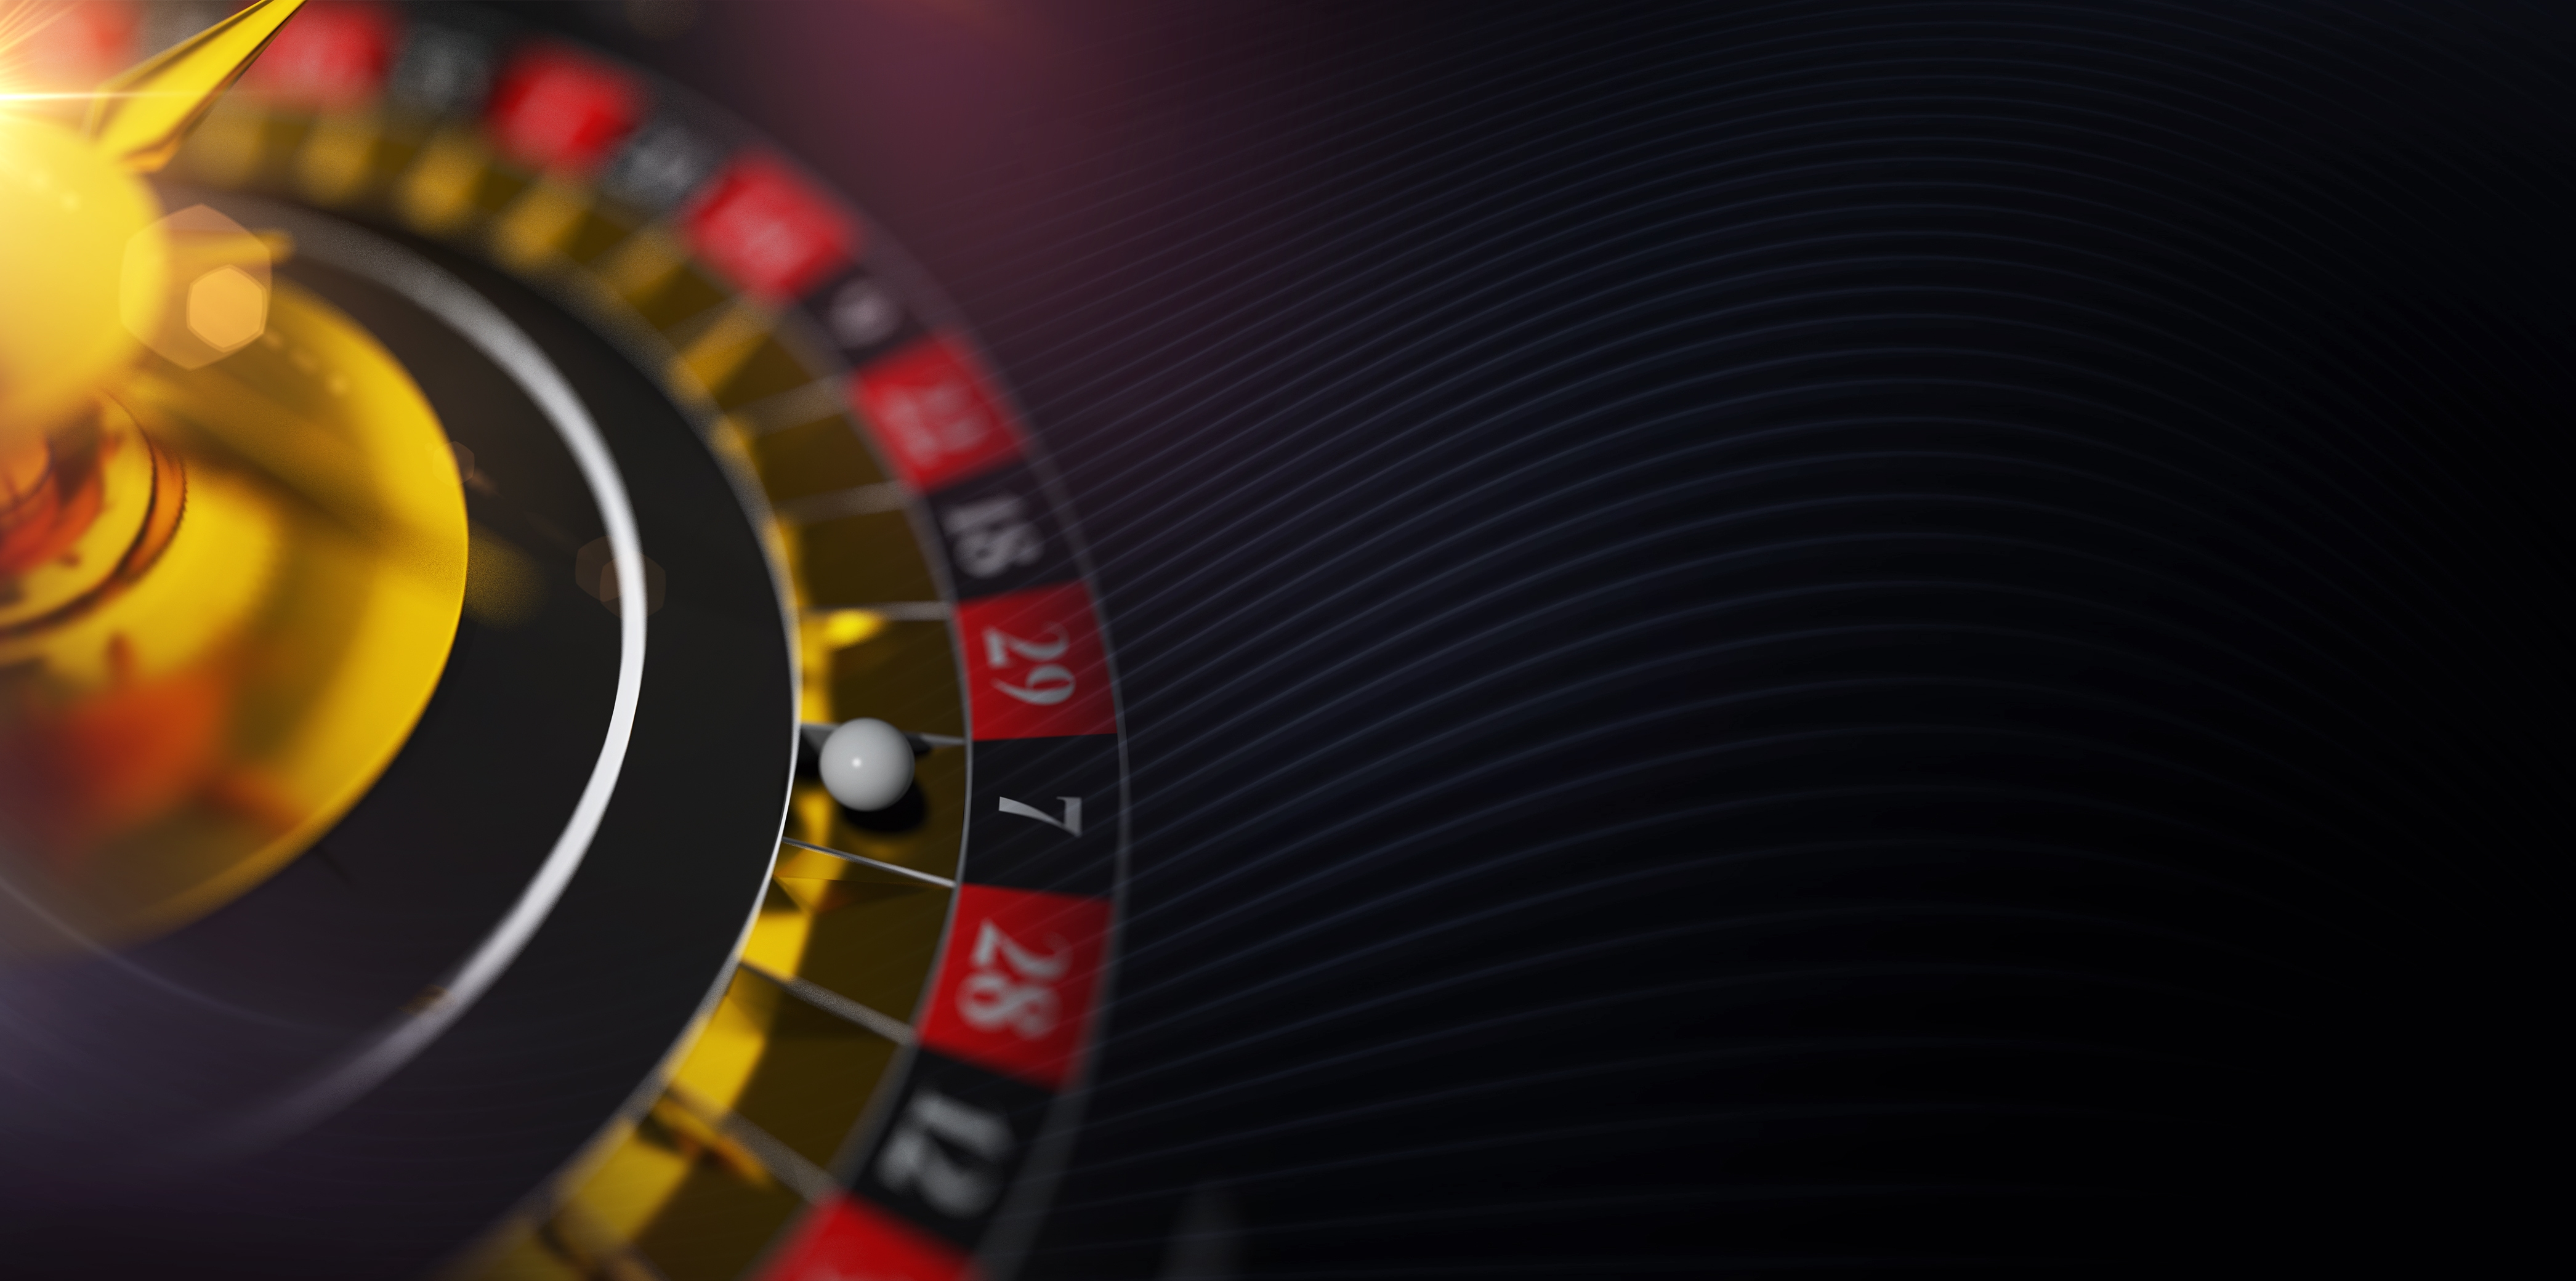 Rtg casino free spins